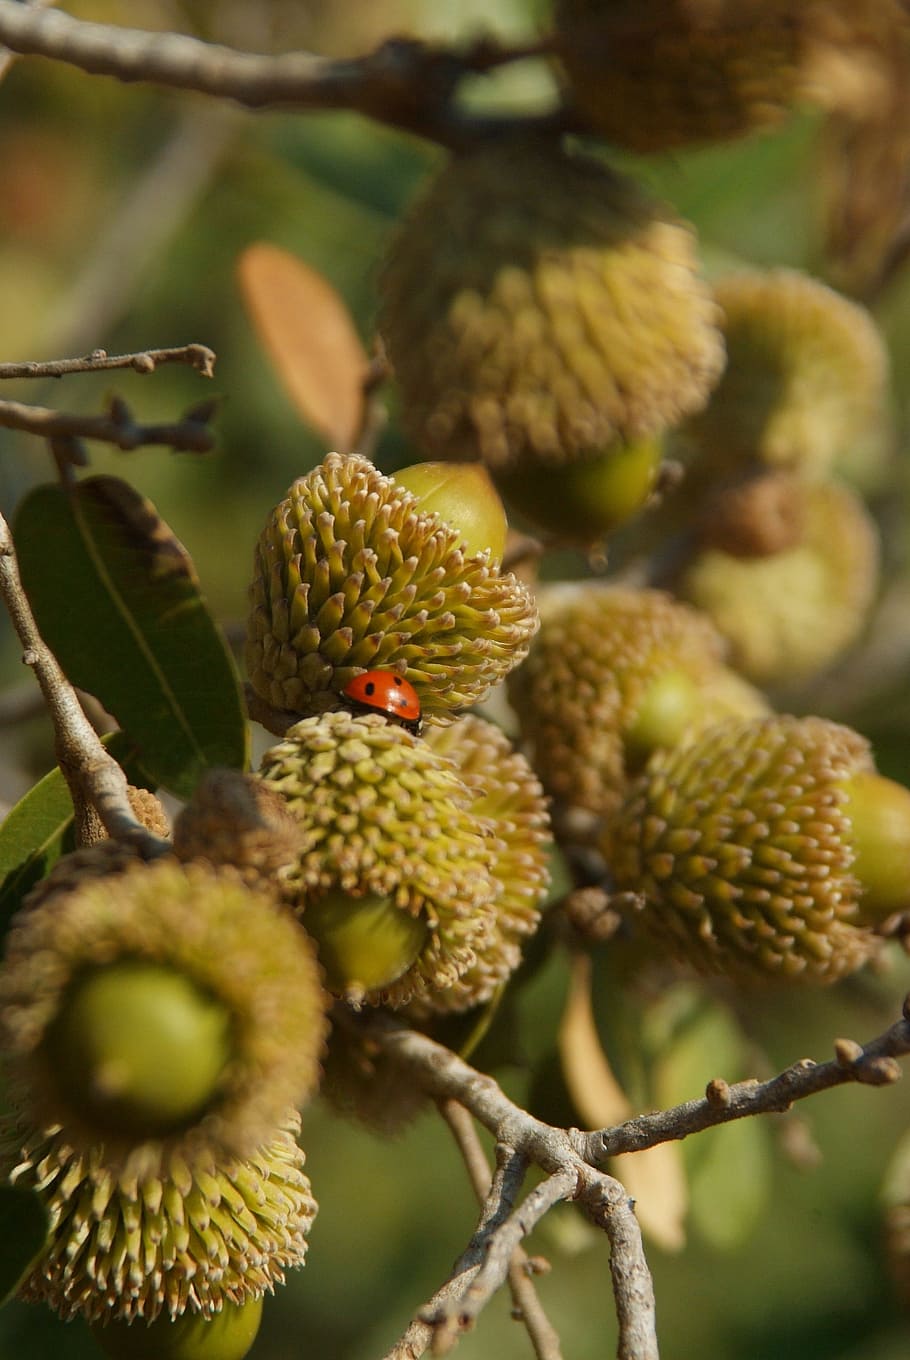 acorn, quercus ithaburensis, Acorn, Quercus Ithaburensis, mount thabor's oak, ladybird, growth, fruit, close-up, plant, food and drink